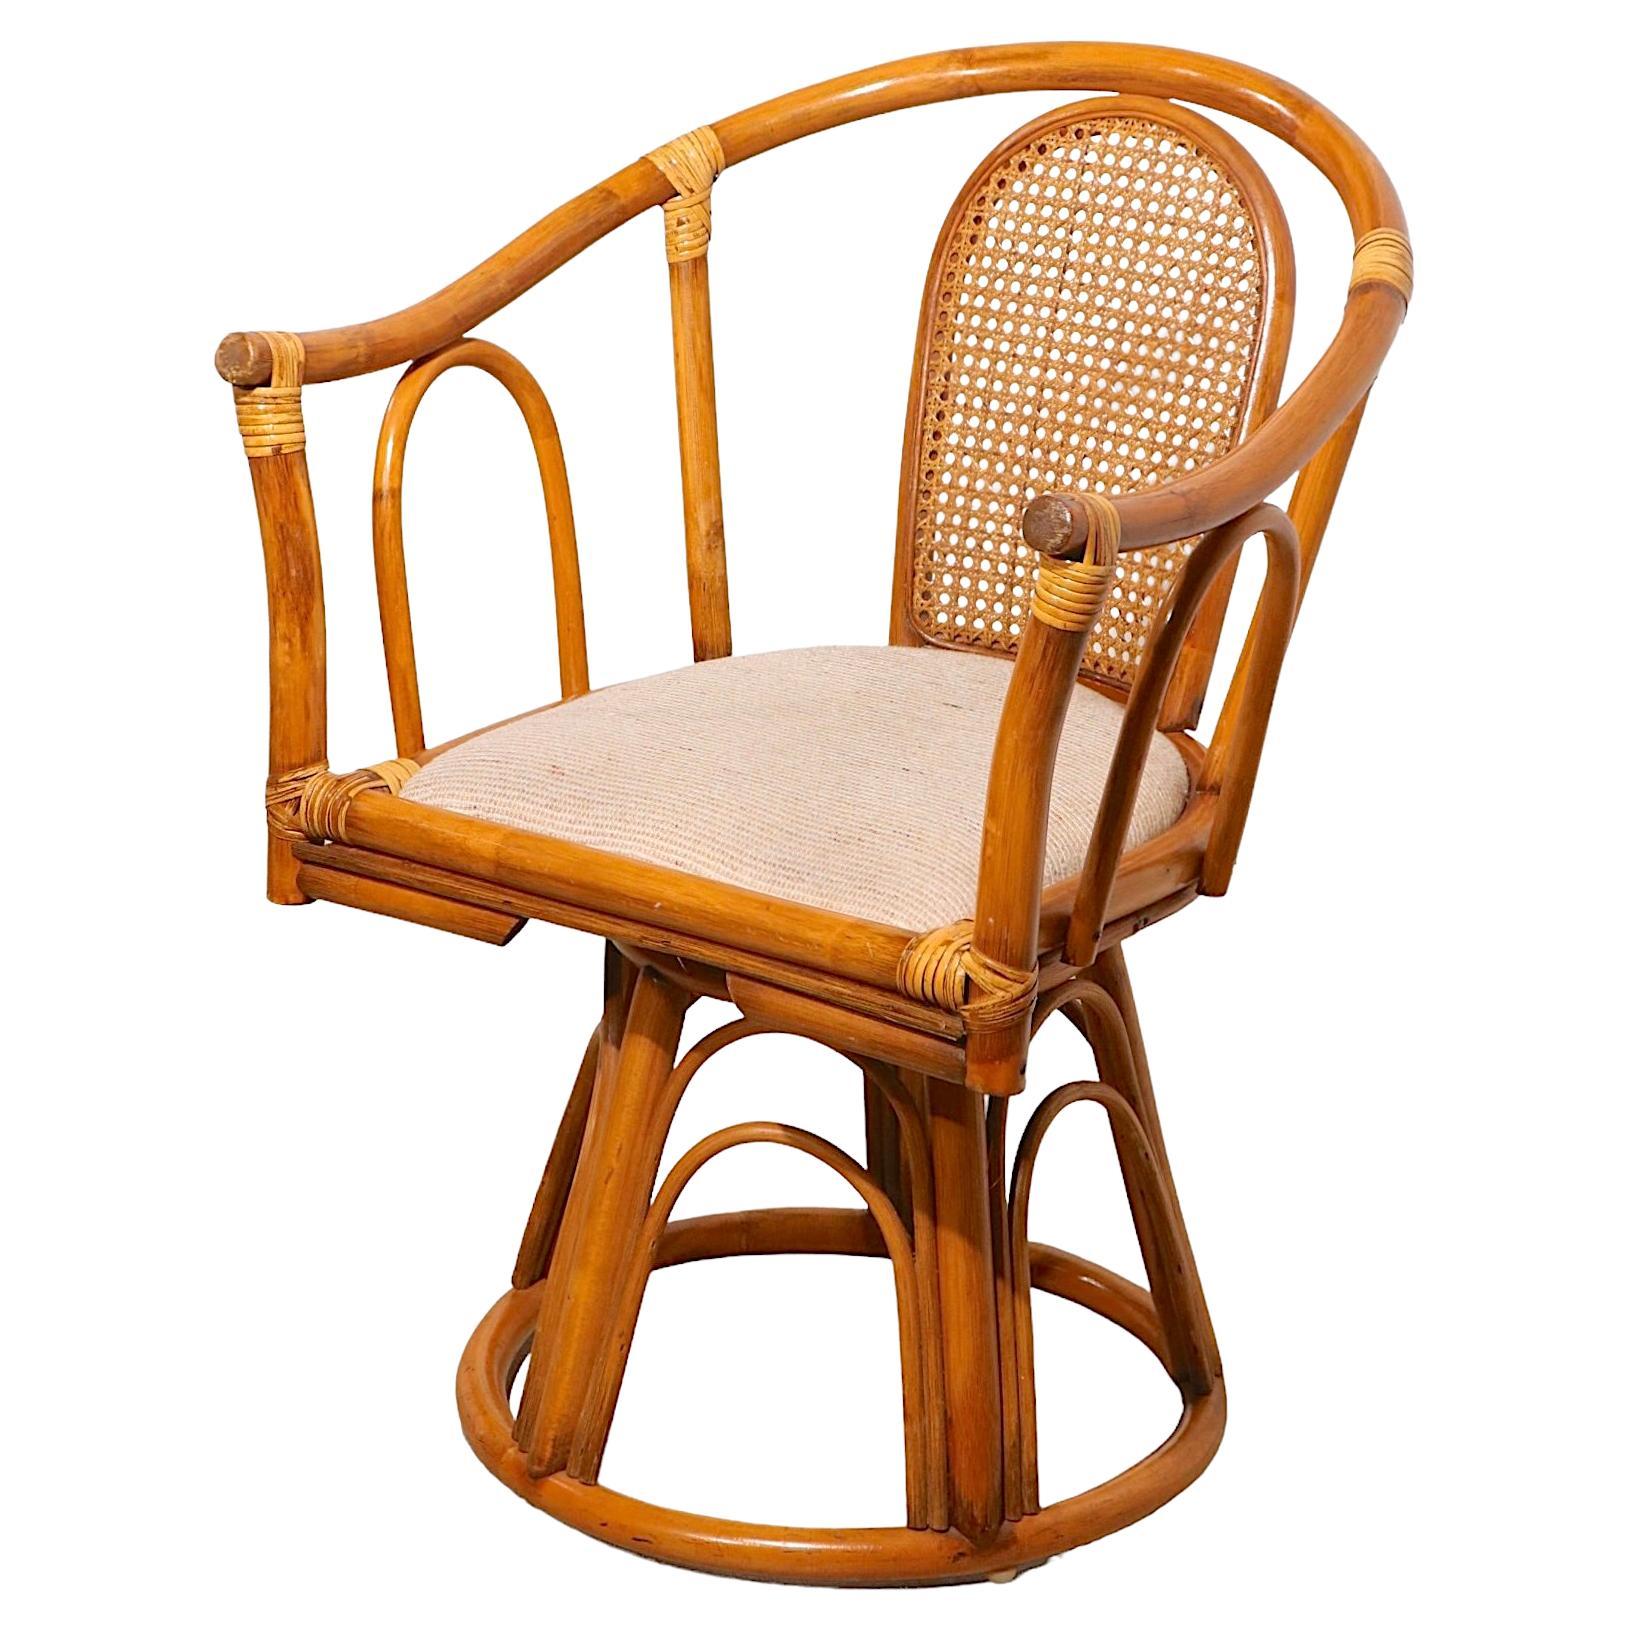 Swivel Bamboo Chair by Henry Olko